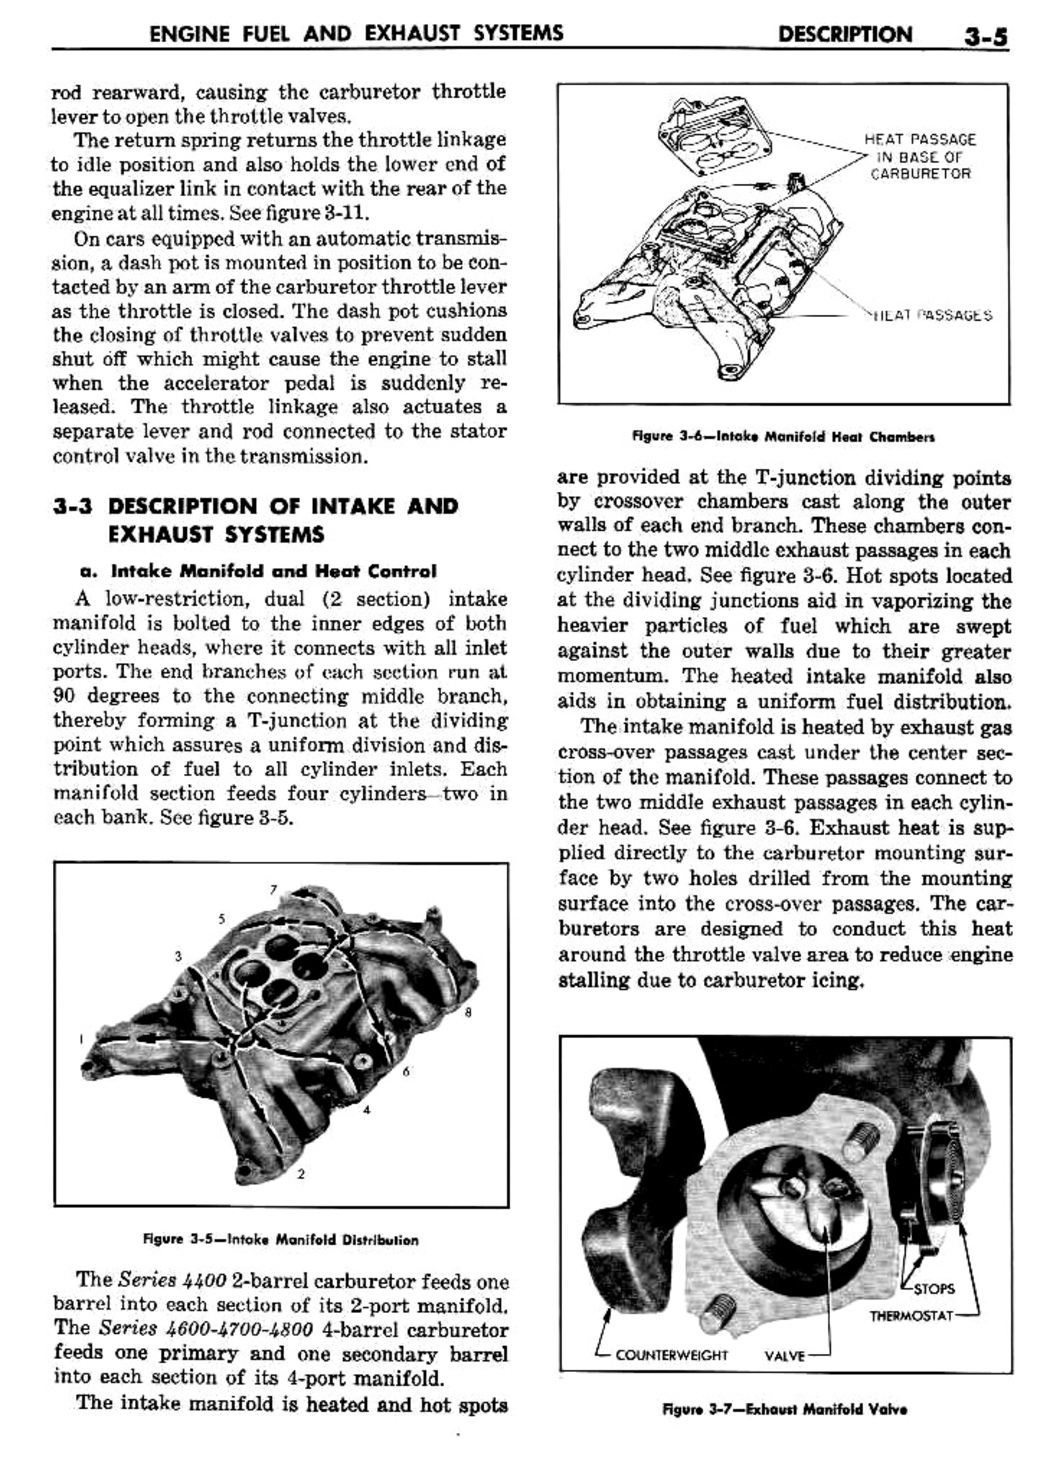 n_04 1960 Buick Shop Manual - Engine Fuel & Exhaust-005-005.jpg